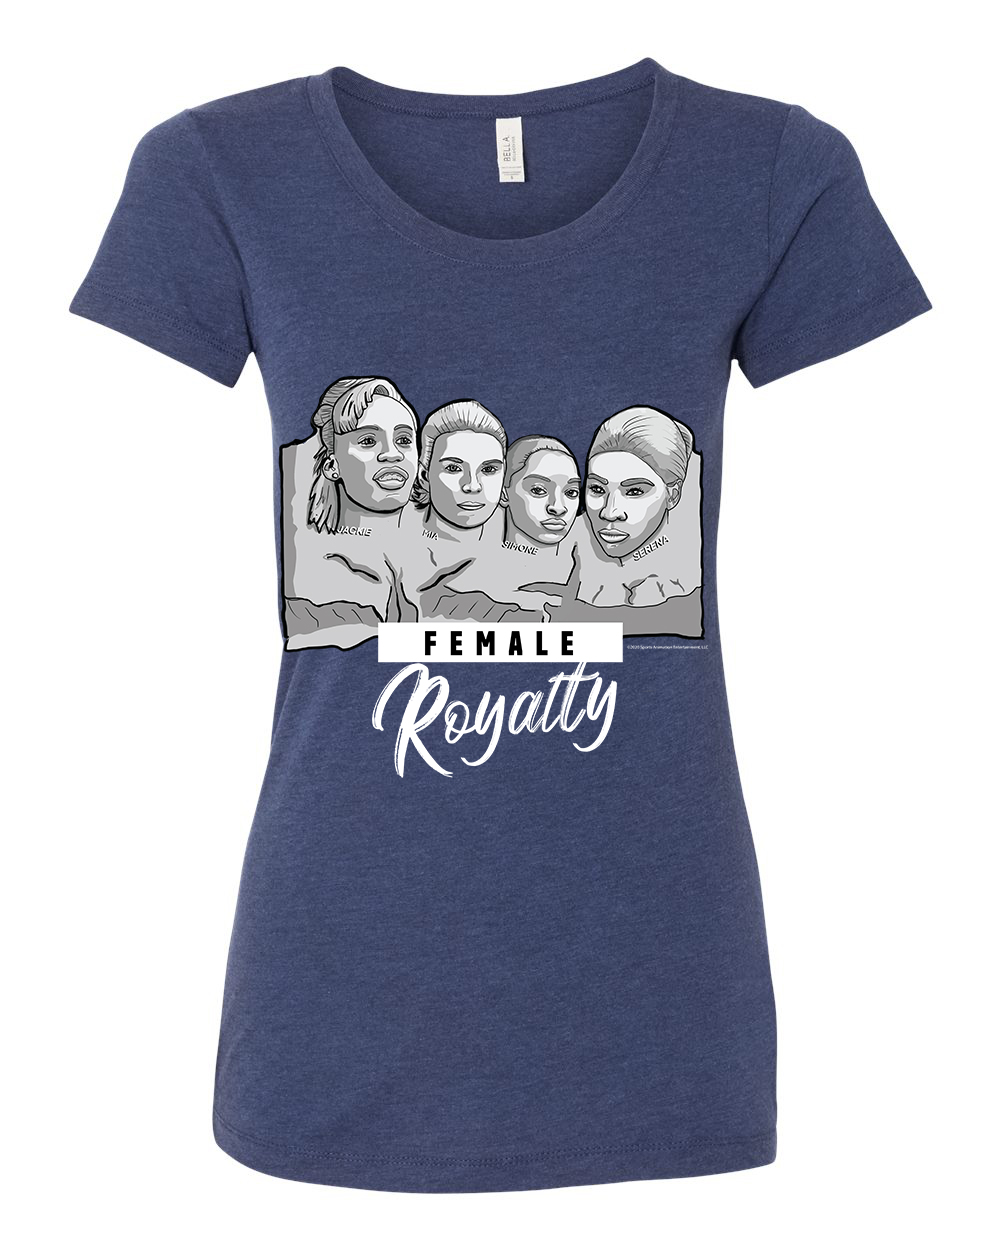 Mount Rushmore - Female Royalty (Navy Blue)